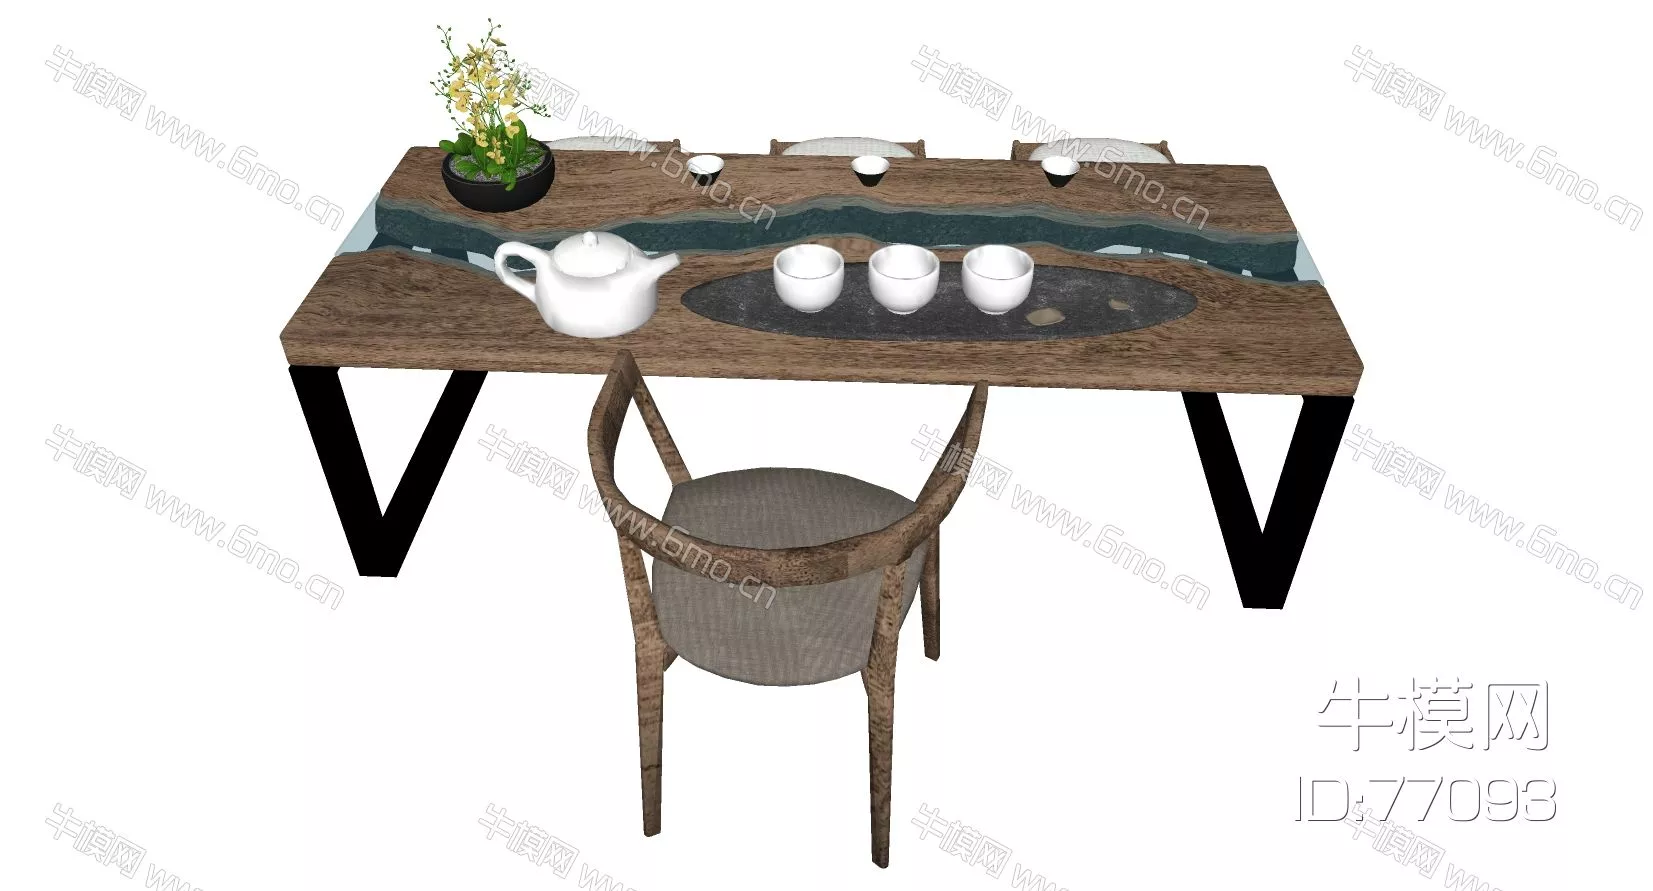 CHINESE TEA TABLE SET - SKETCHUP 3D MODEL - ENSCAPE - 77093